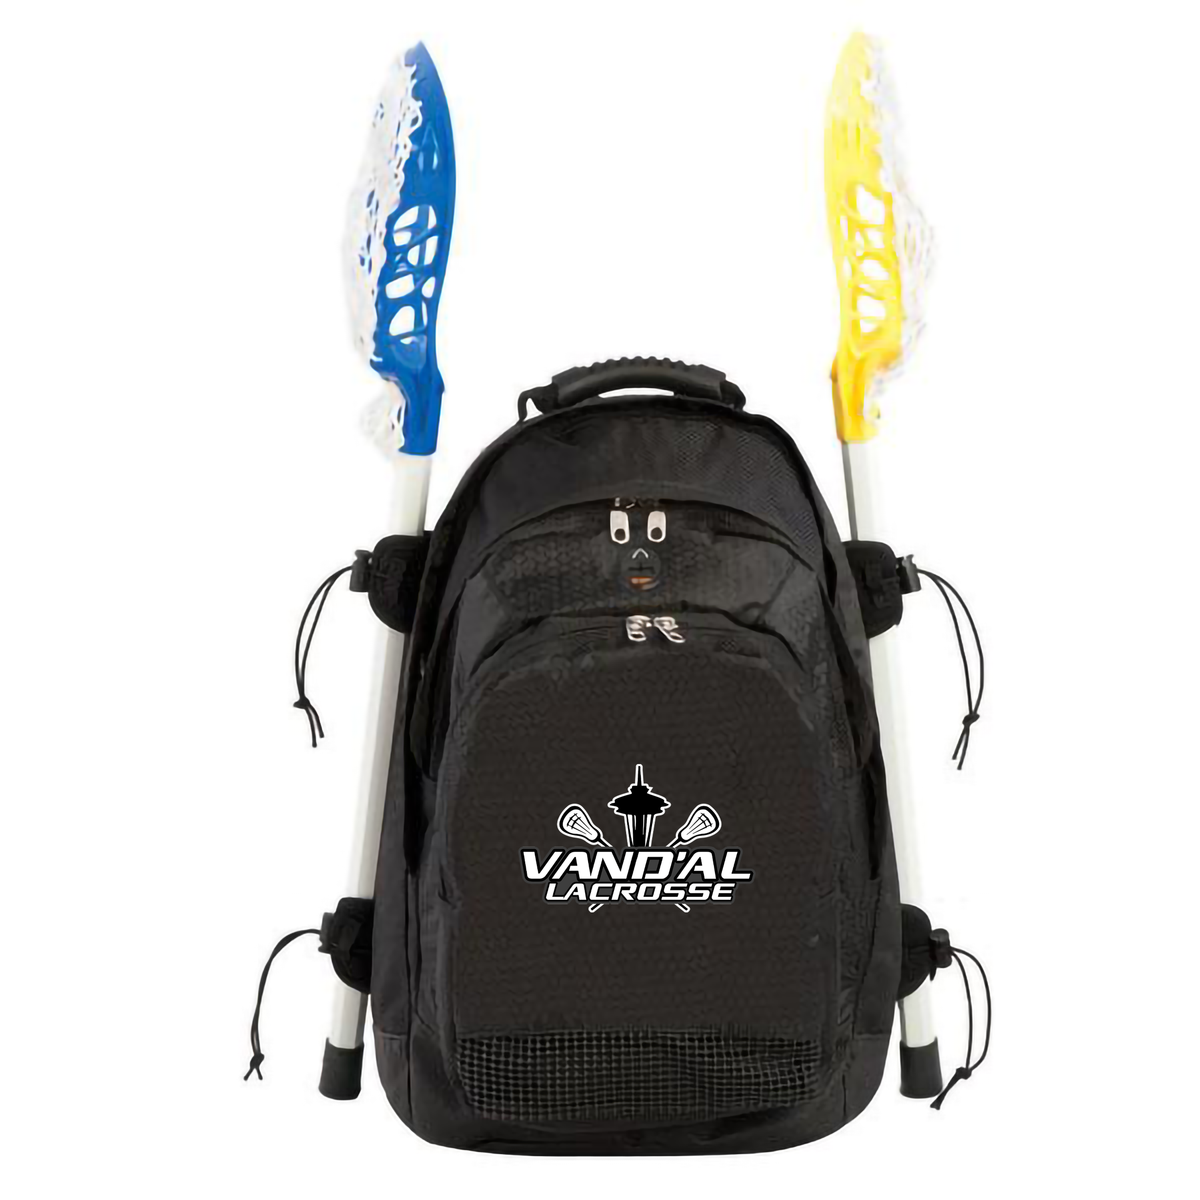 Vand'al Lacrosse Deluxe Sports Backpack